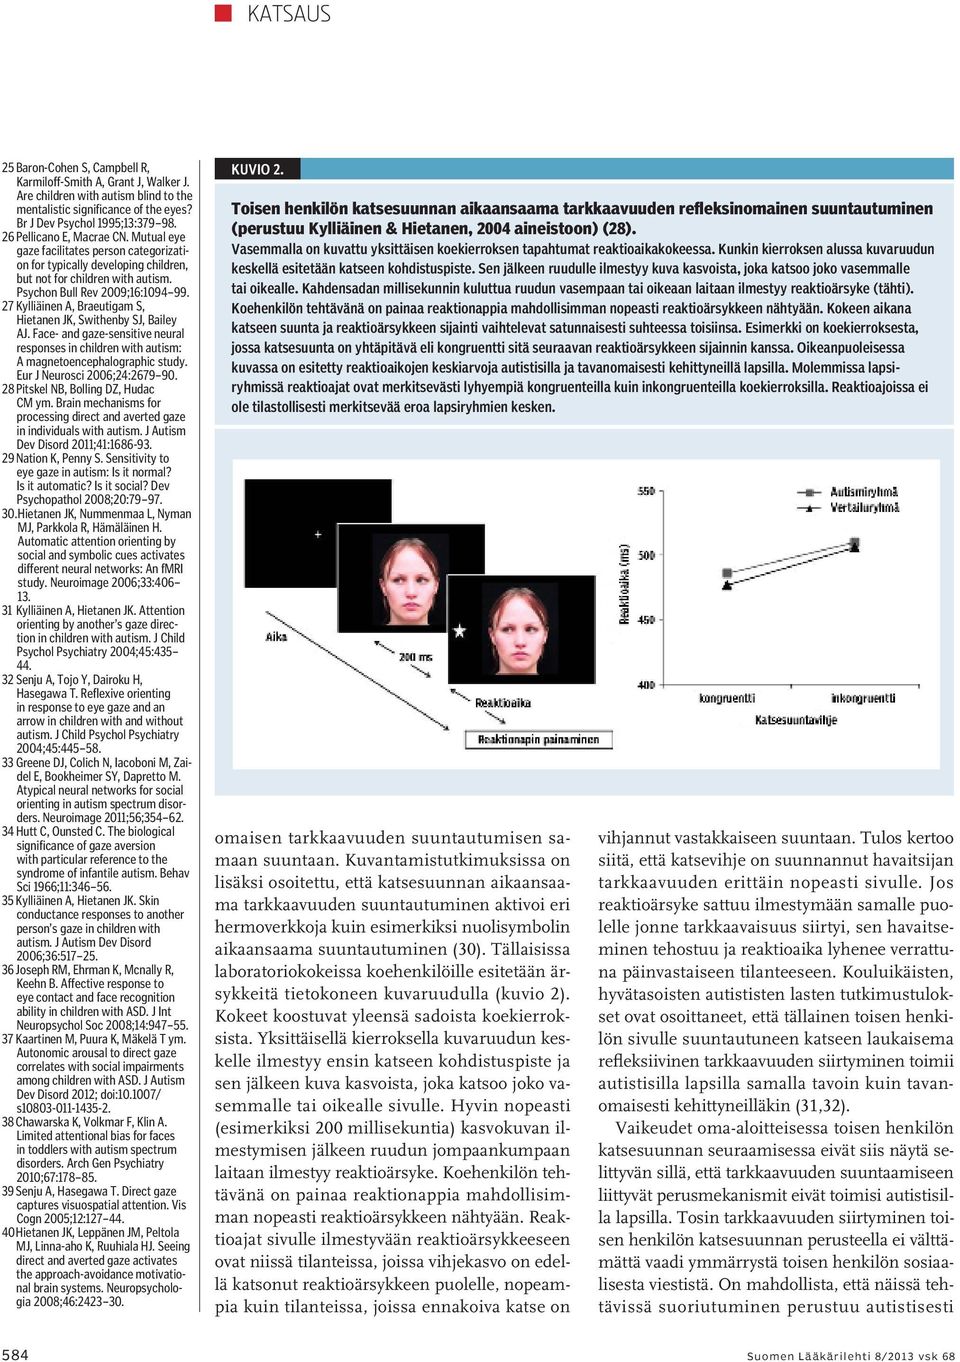 27 Kylliäinen A, Braeutigam S, Hietanen JK, Swithenby SJ, Bailey AJ. Face- and gaze-sensitive neural responses in children with autism: A magnetoencephalographic study. Eur J Neurosci 2006;24:2679 90.